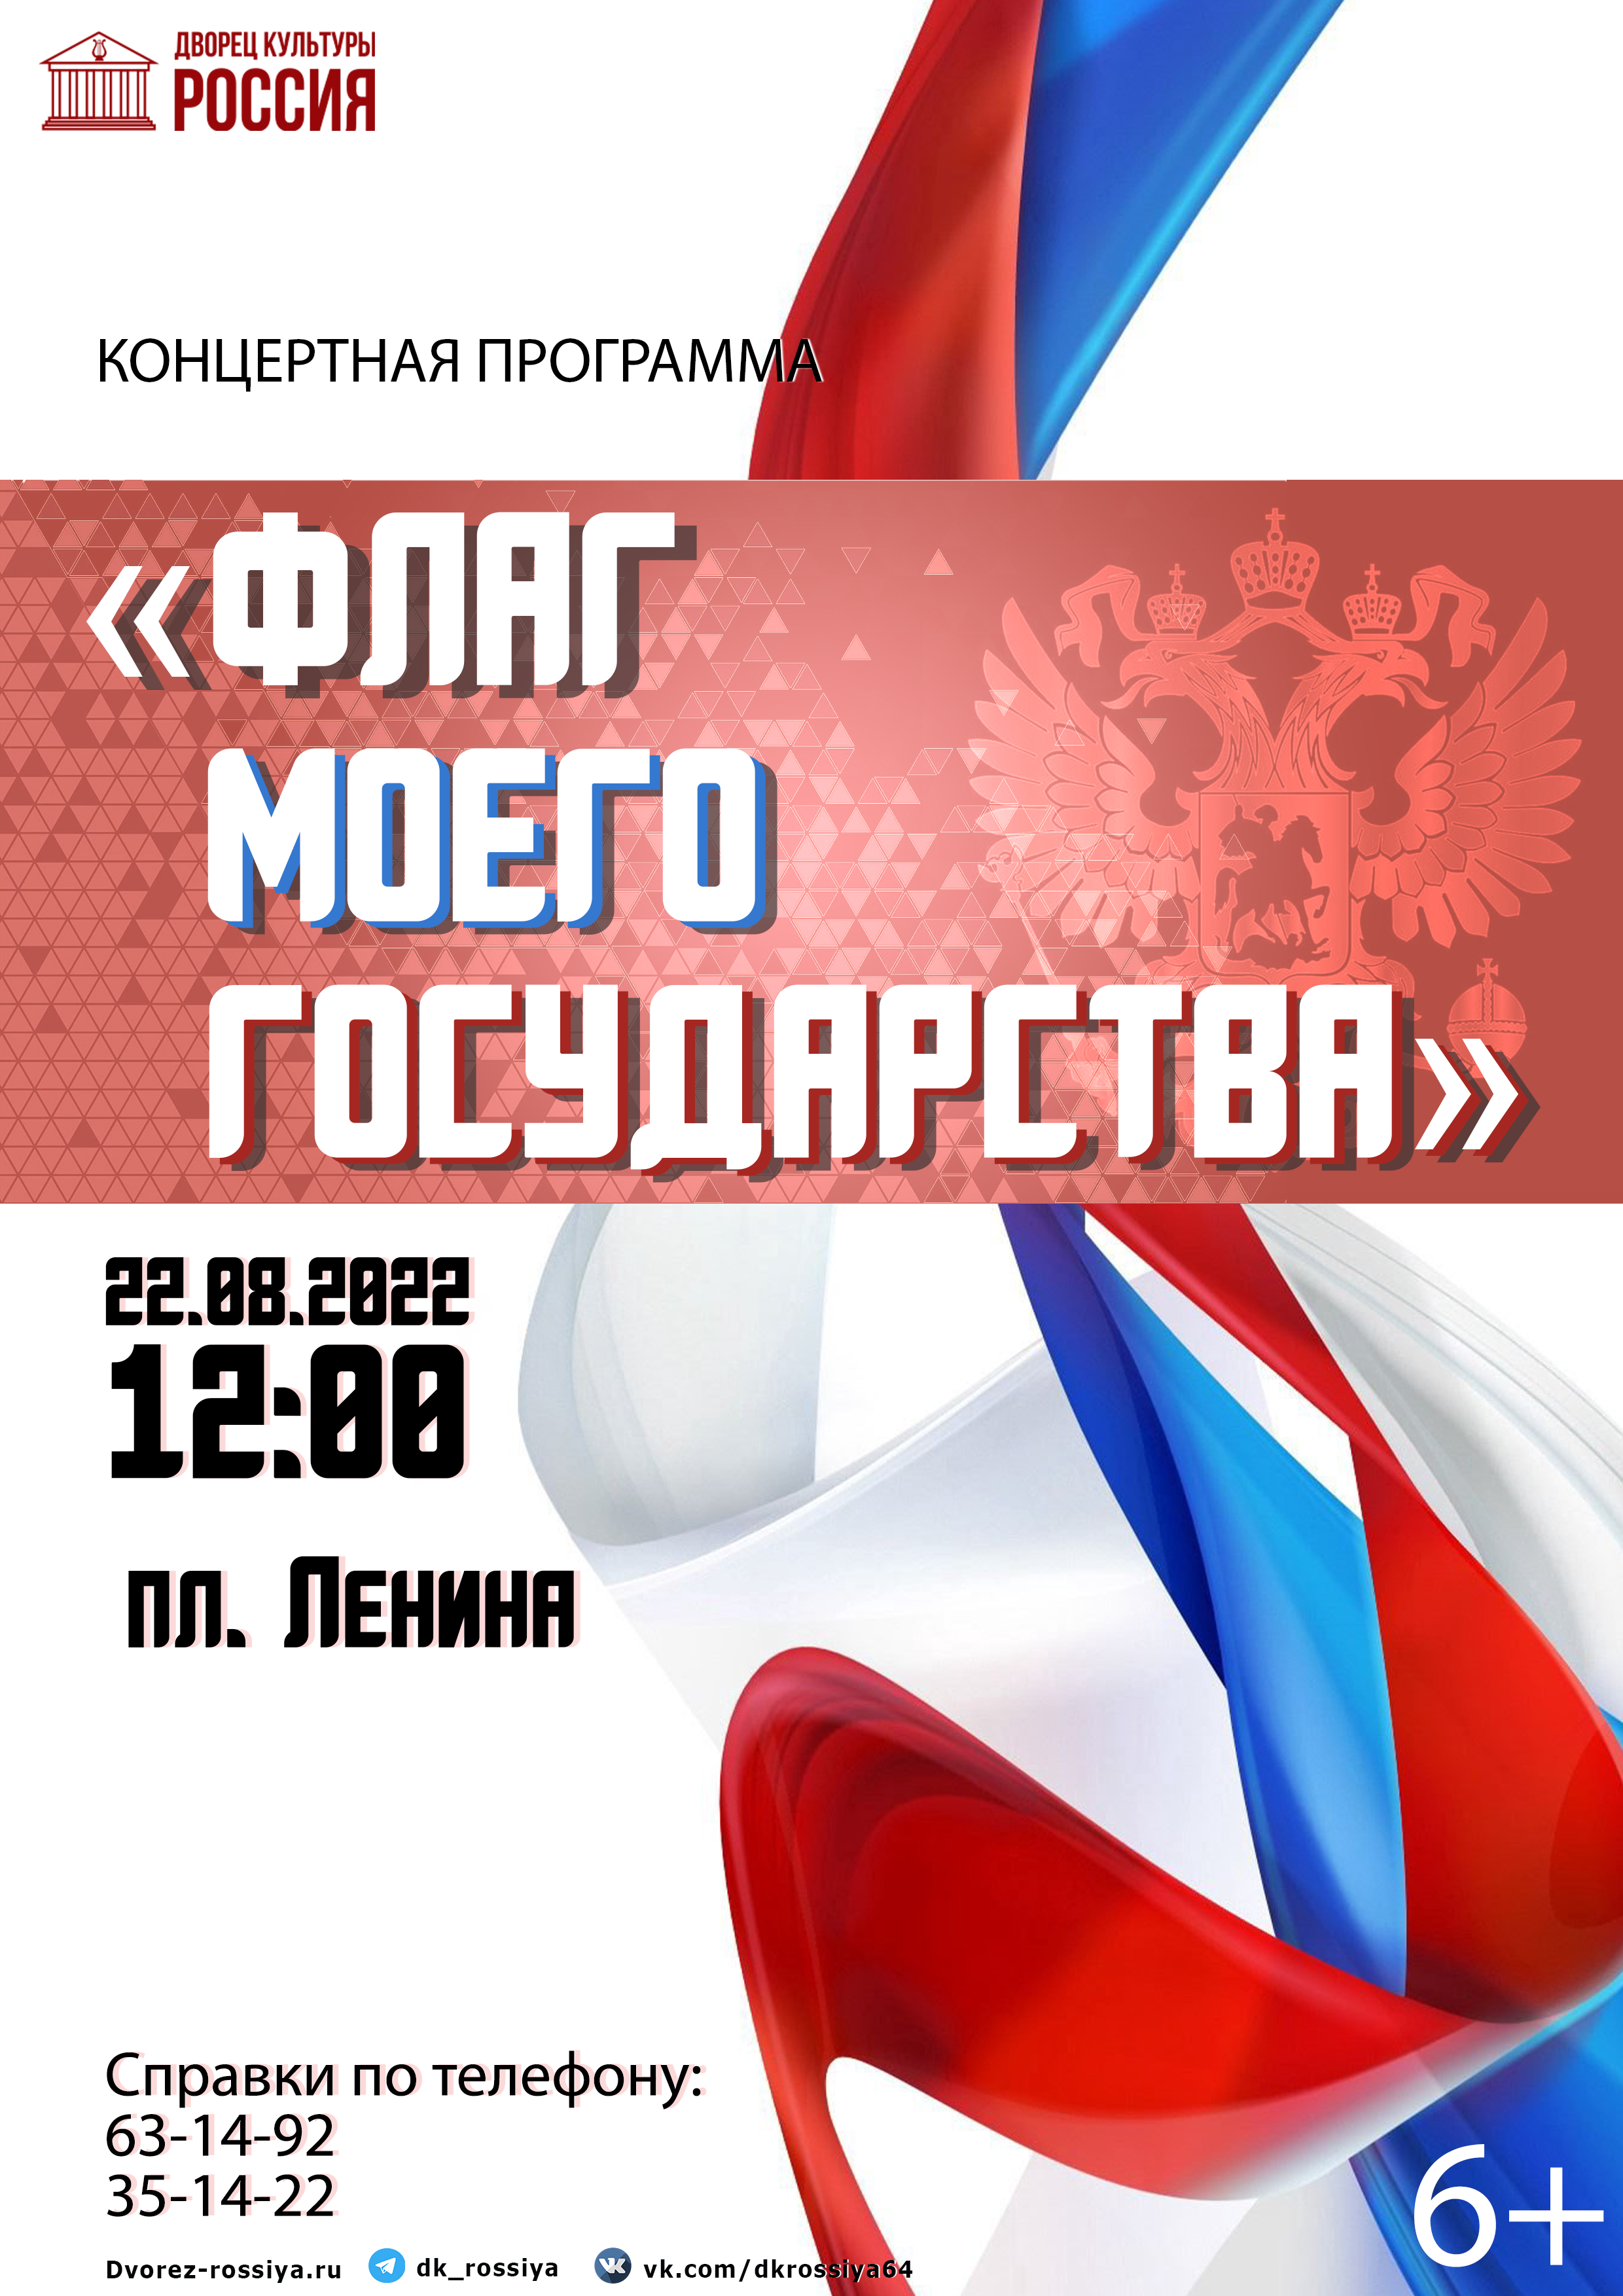 Концертная программа «Флаг моего государства»